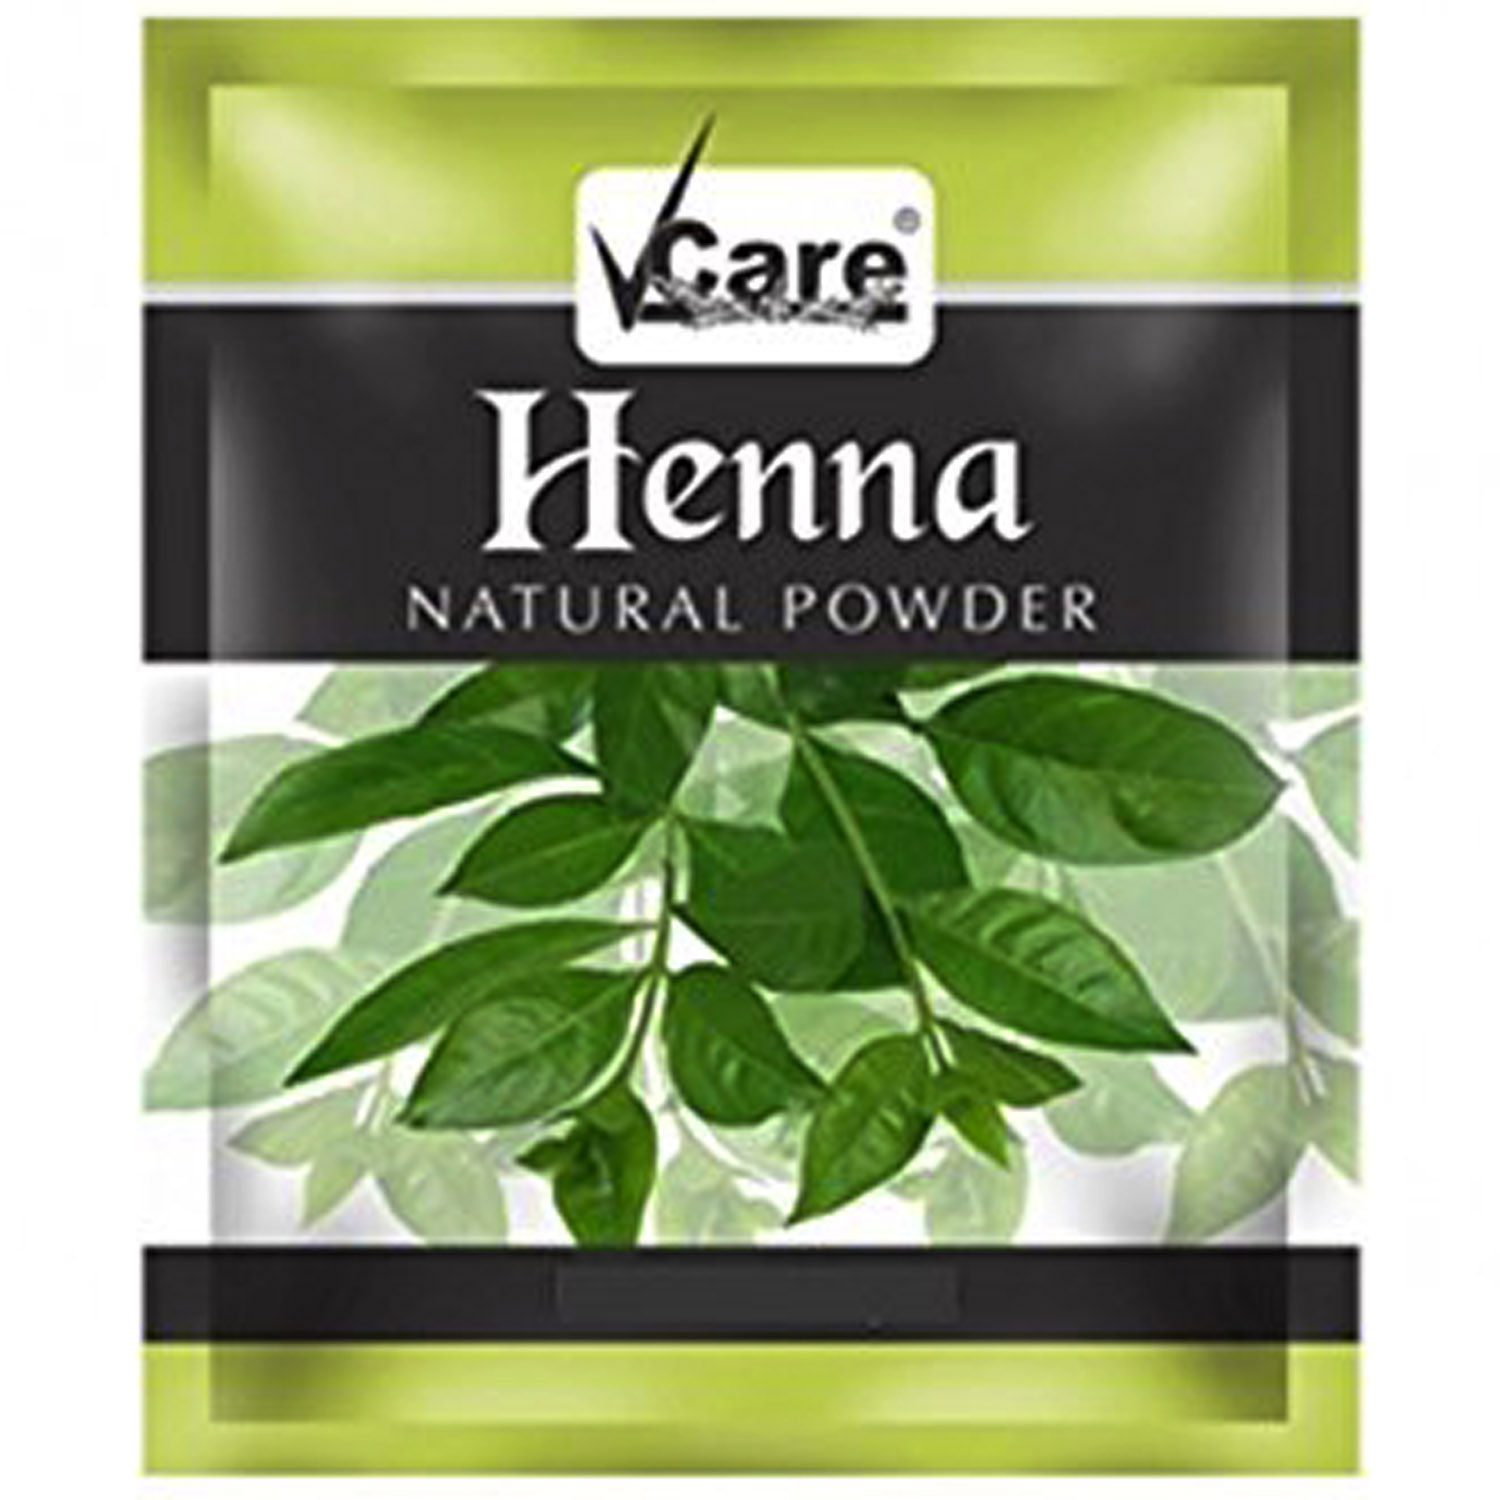 Buy Vcare Henna Natural Powder, 200 gm Online